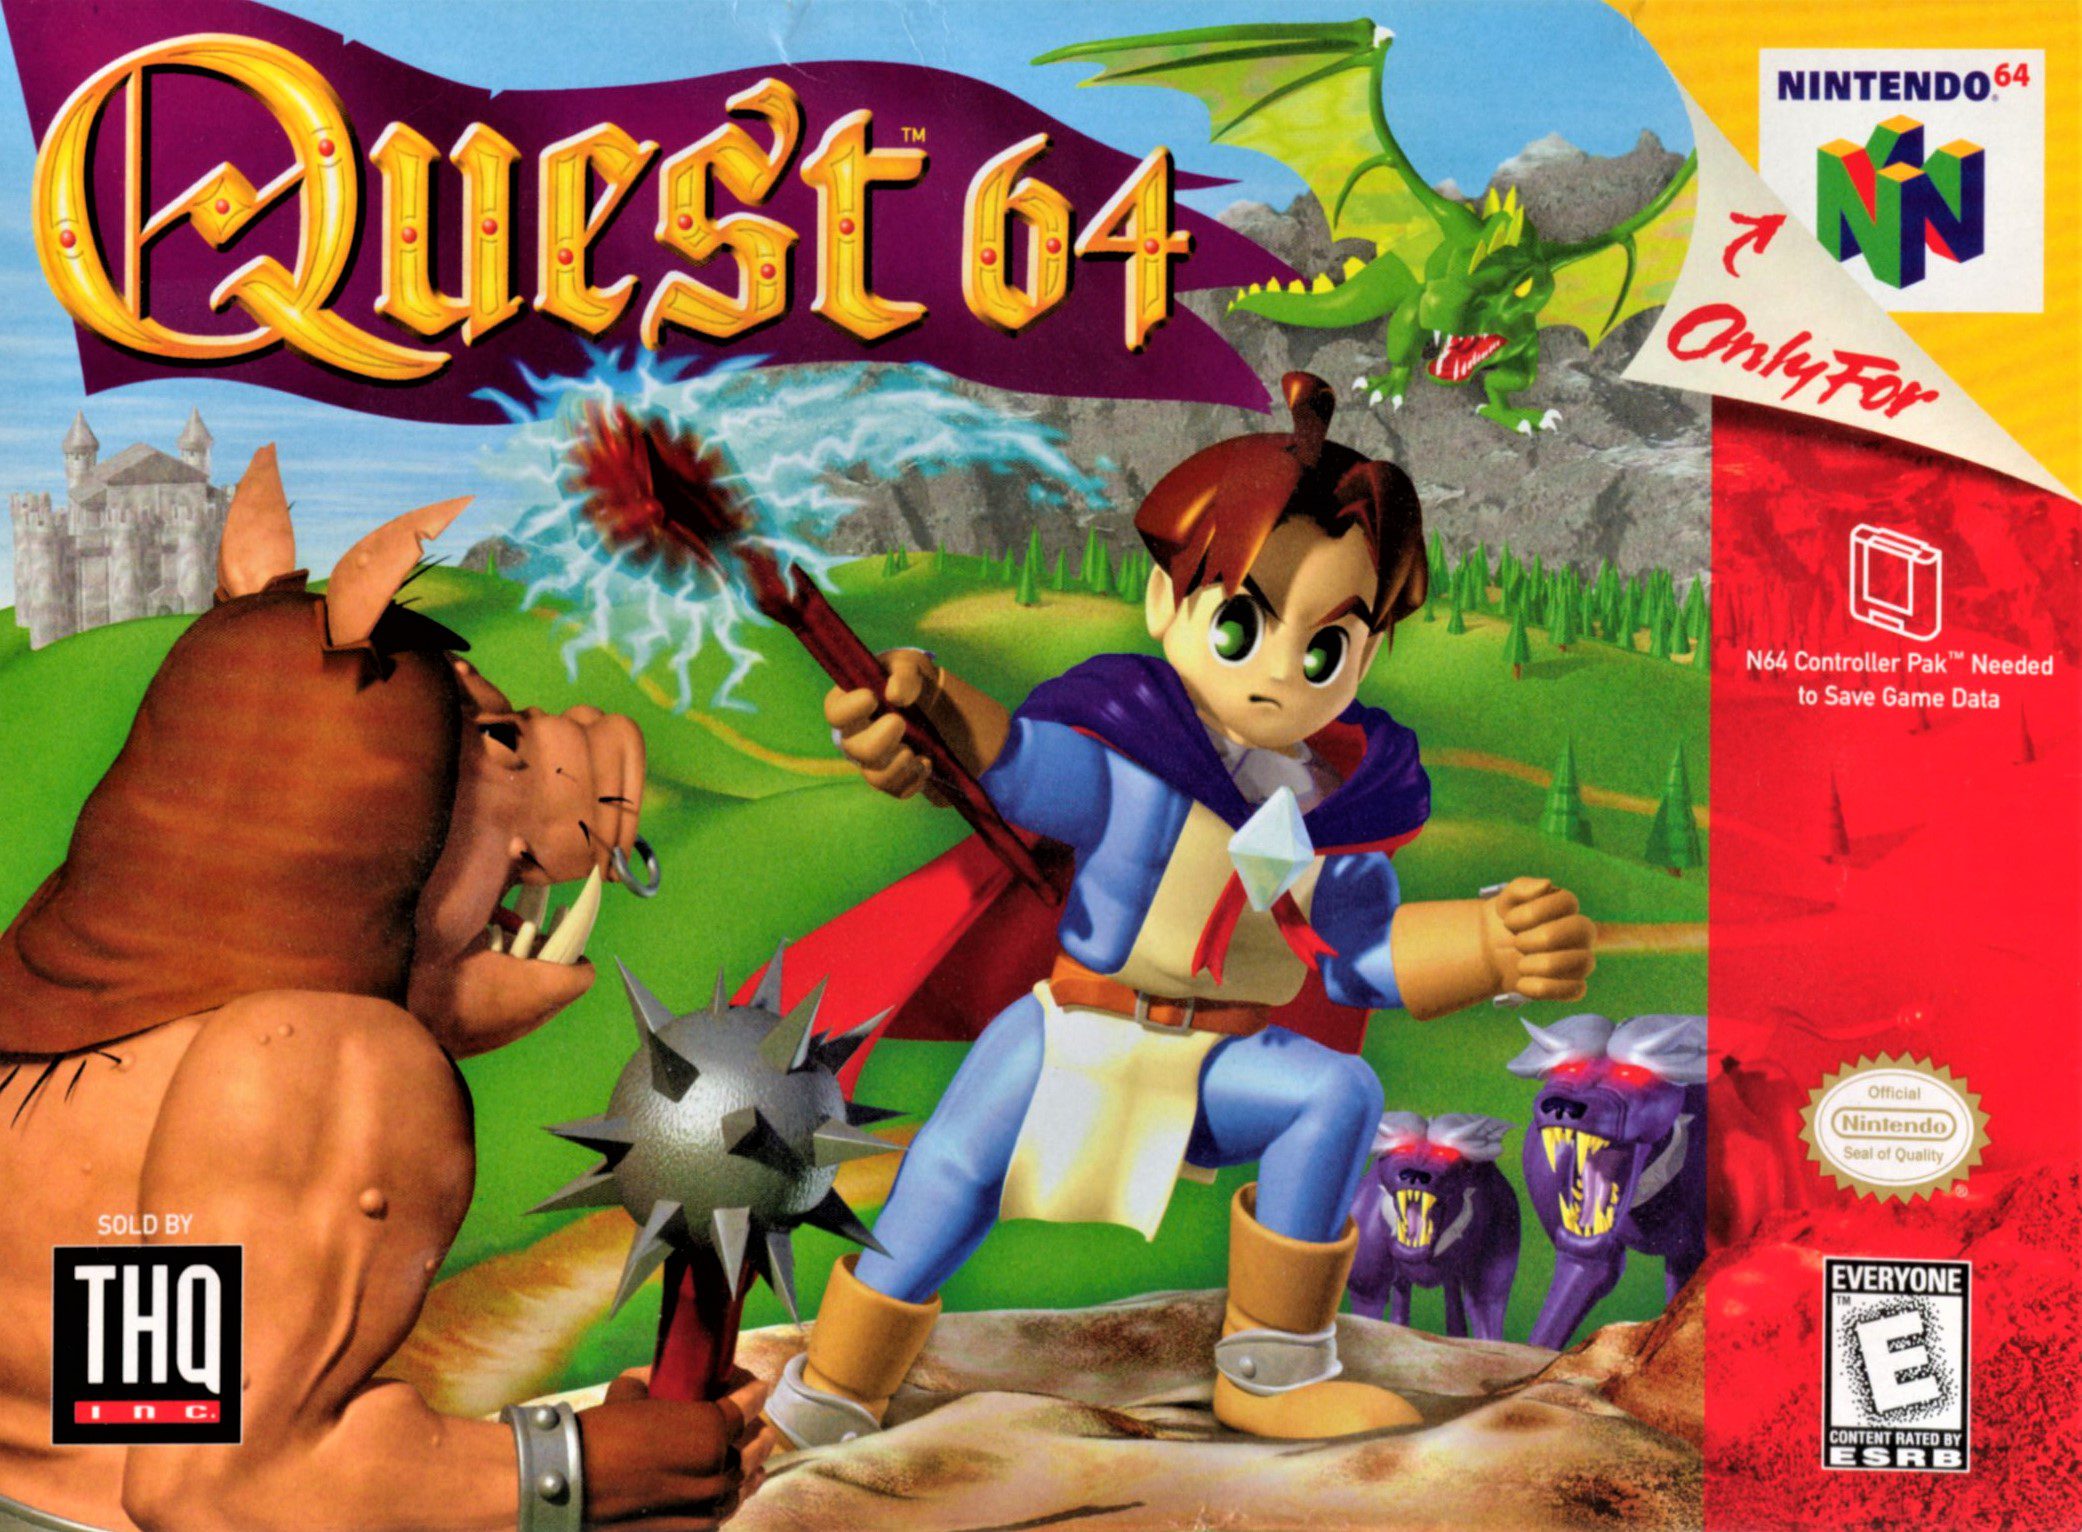 Quest 64 for Nintendo 64